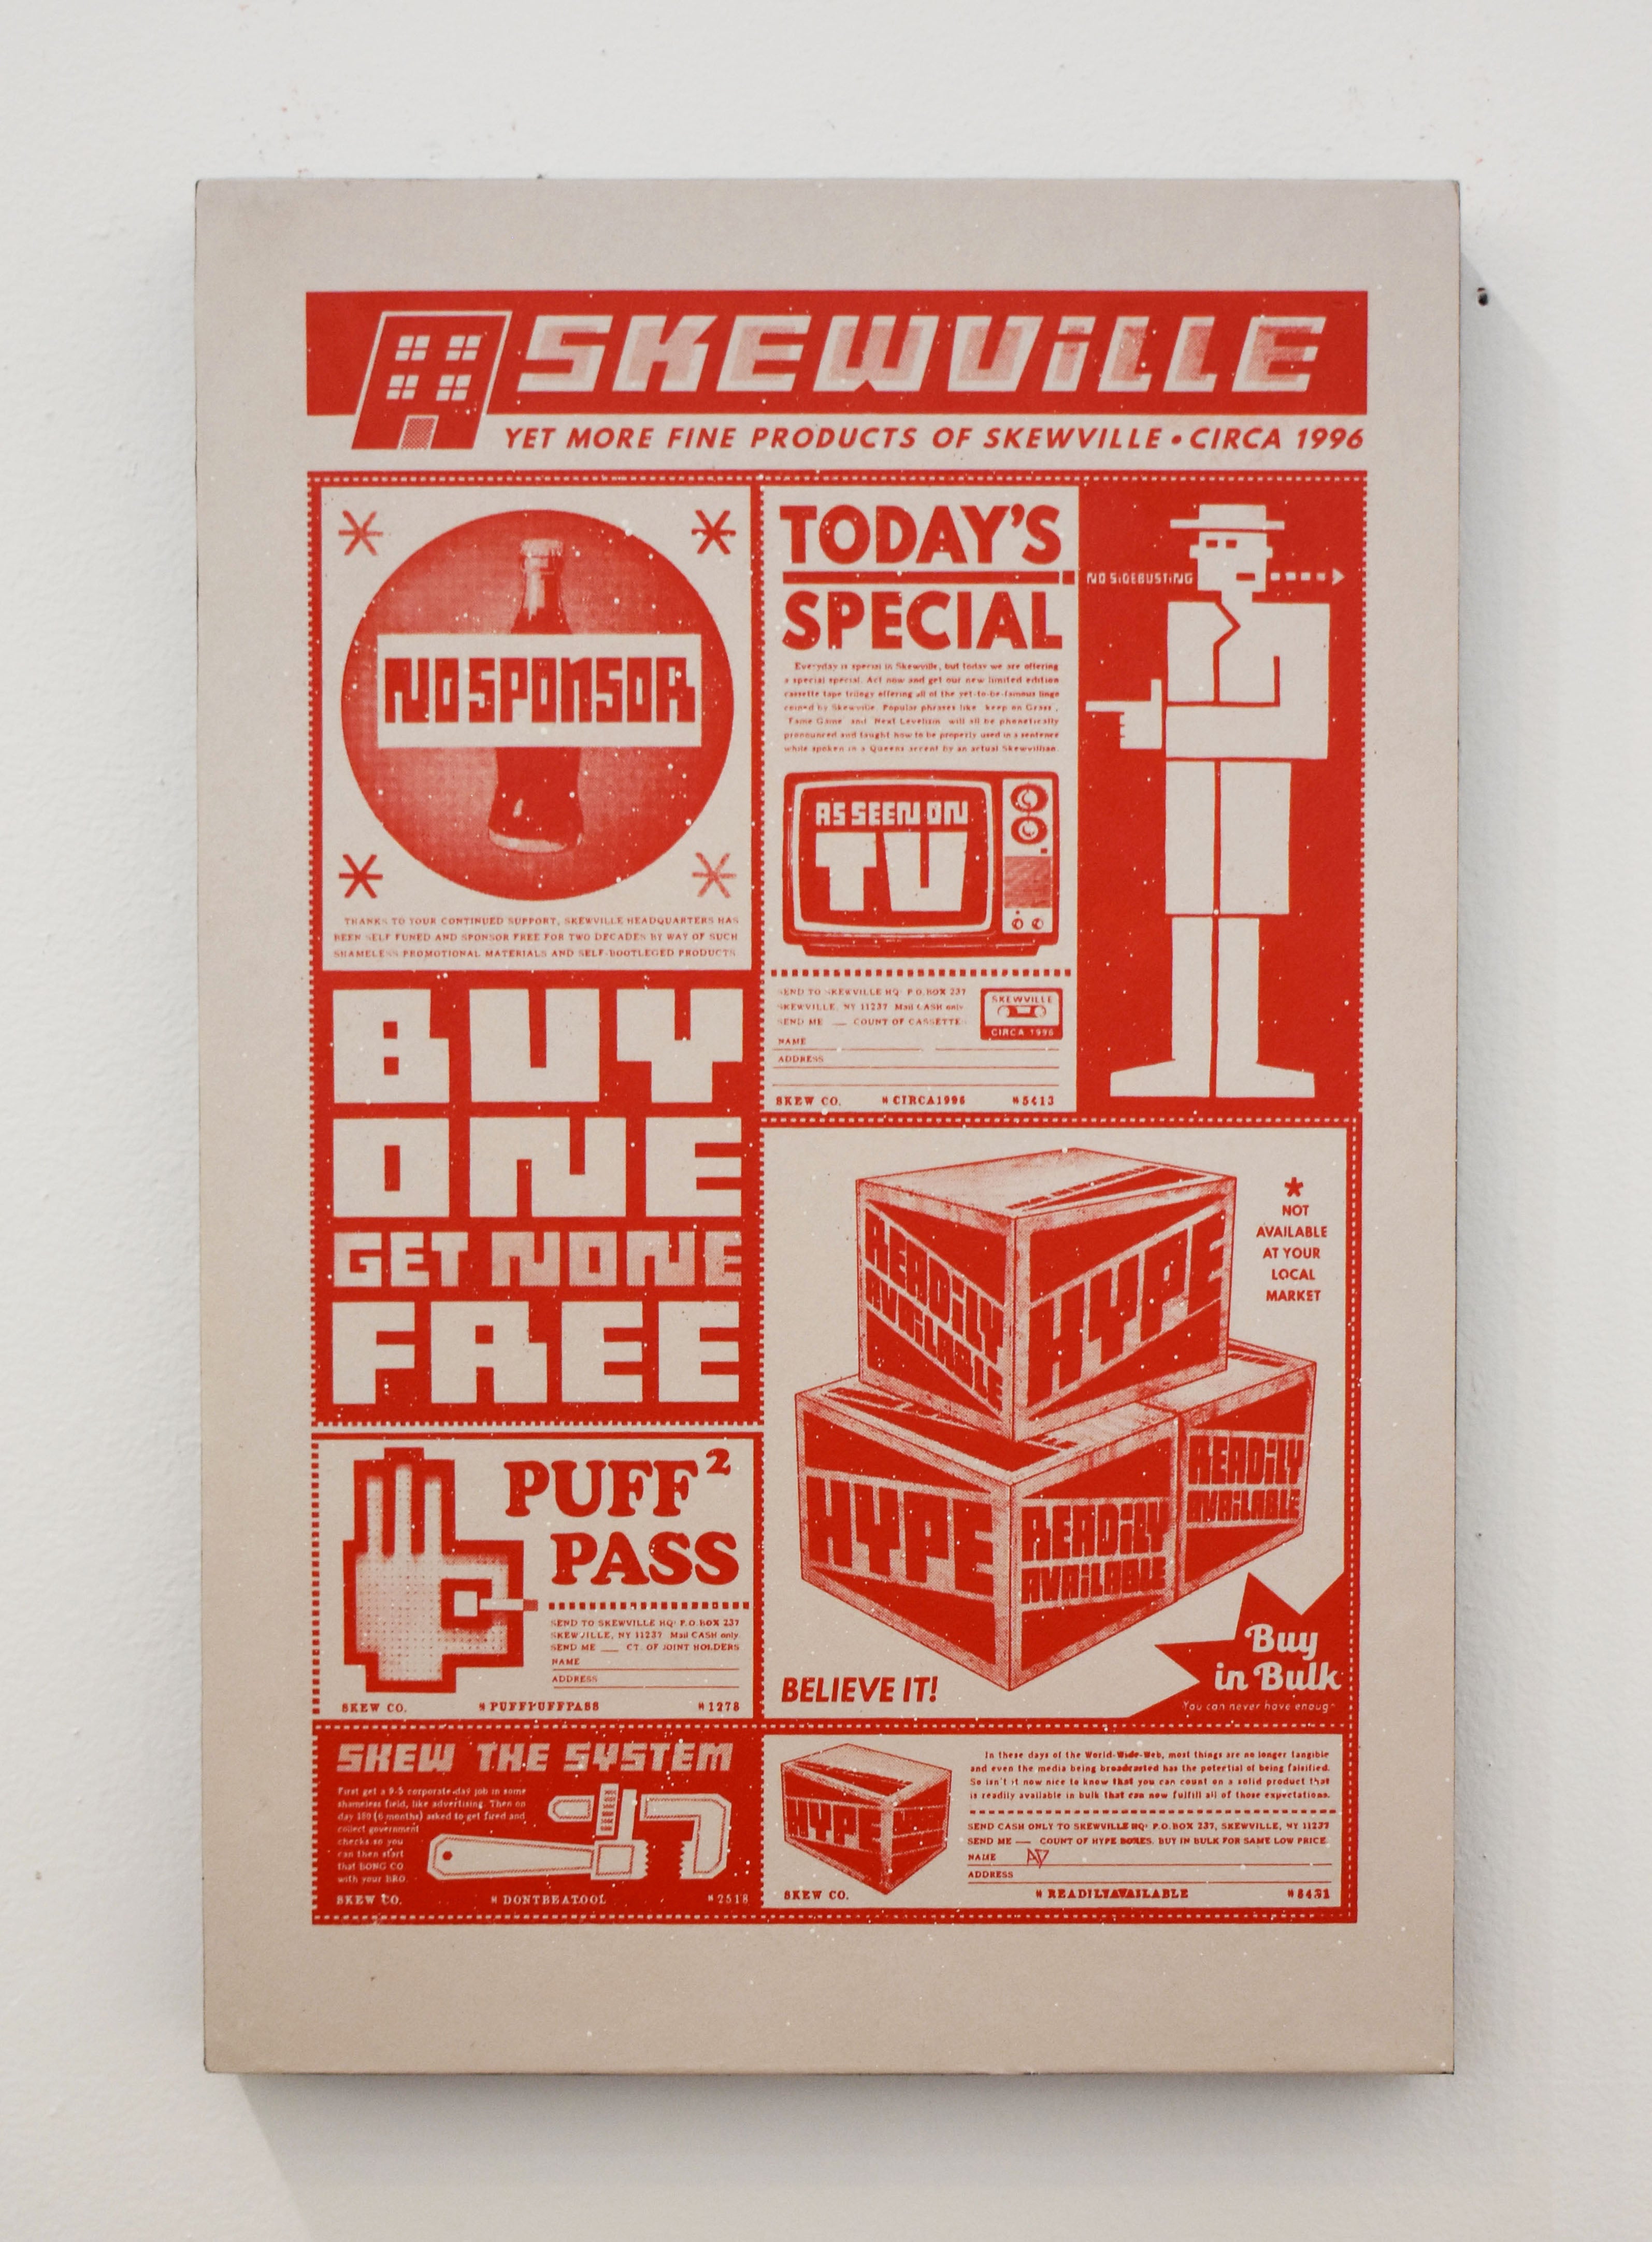 "Skew the System" by Skewville